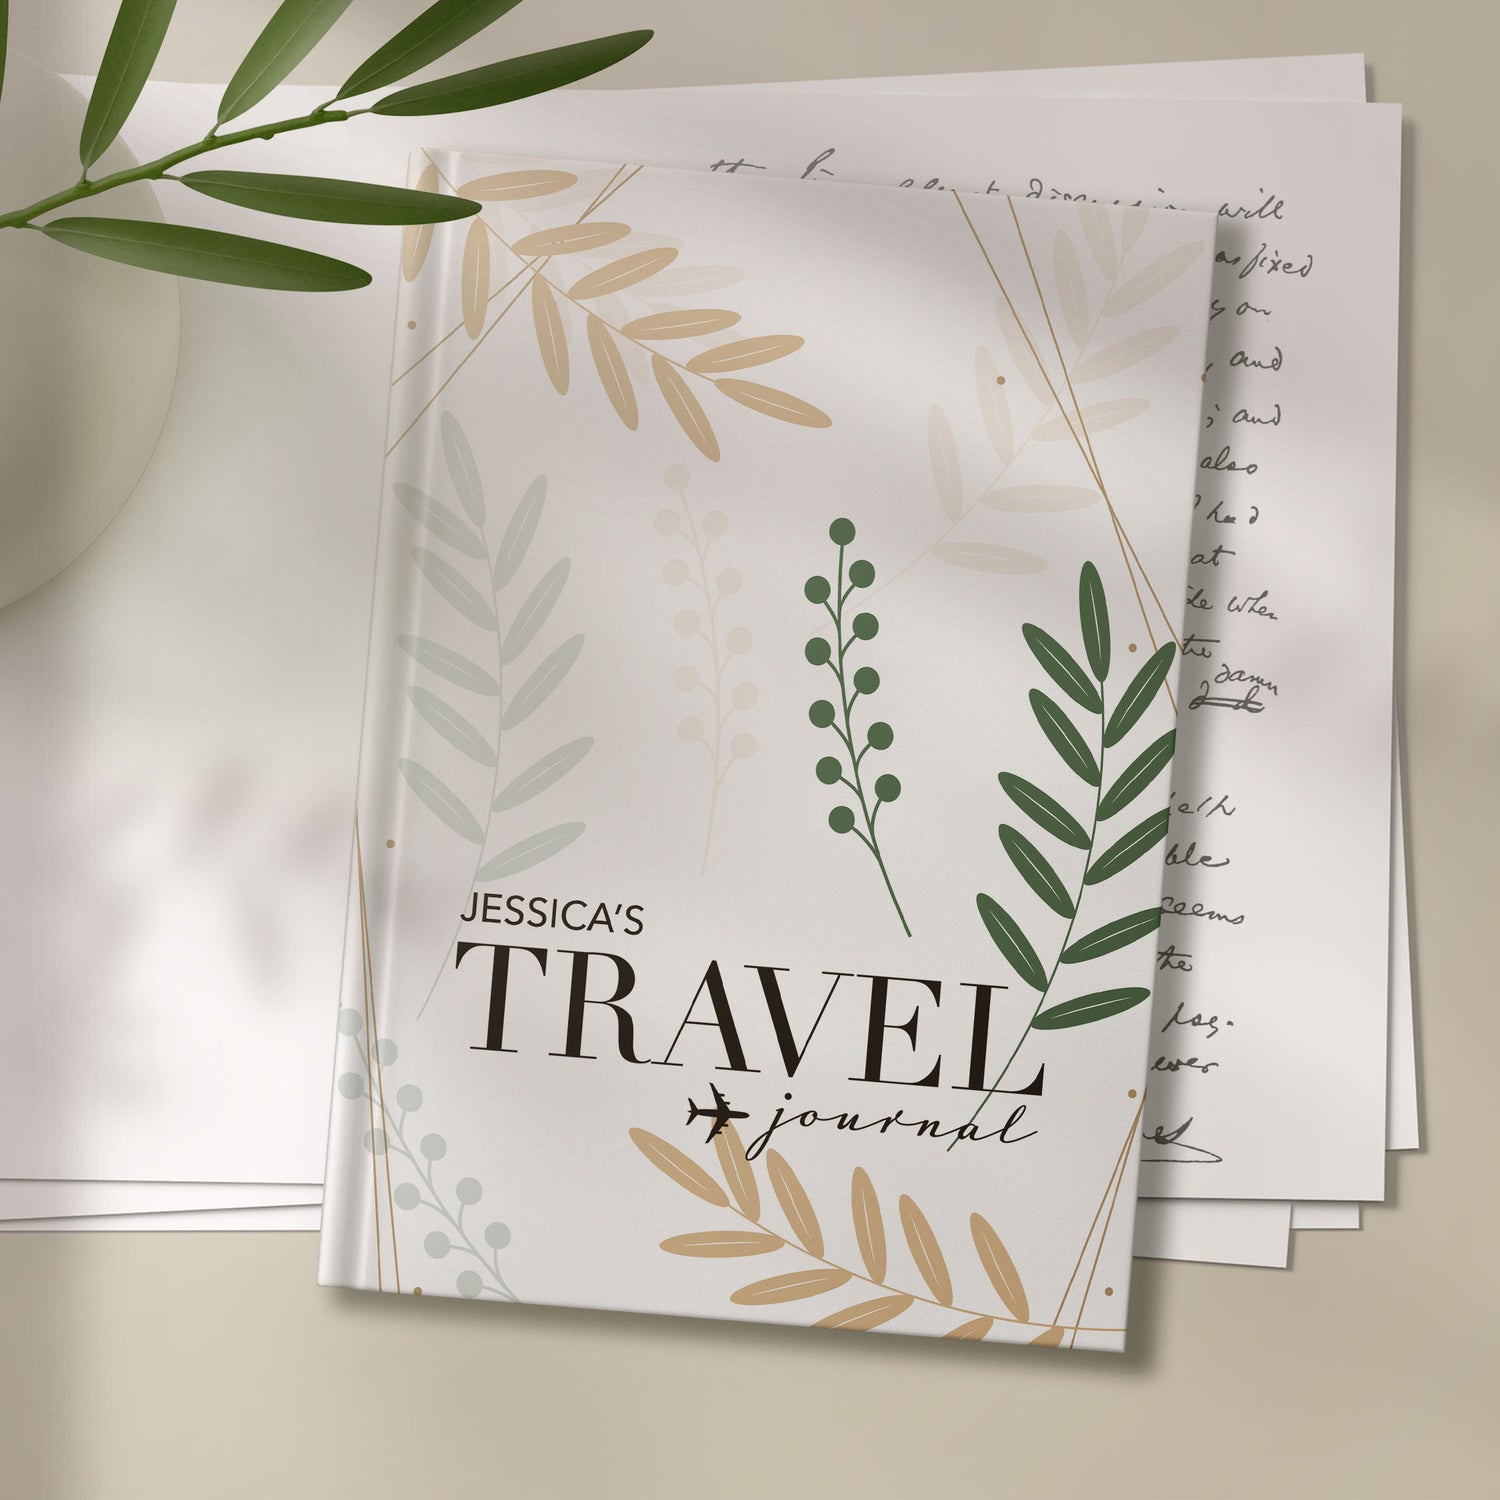 Travel Journal Company - Handmade Personalised Travel Journals